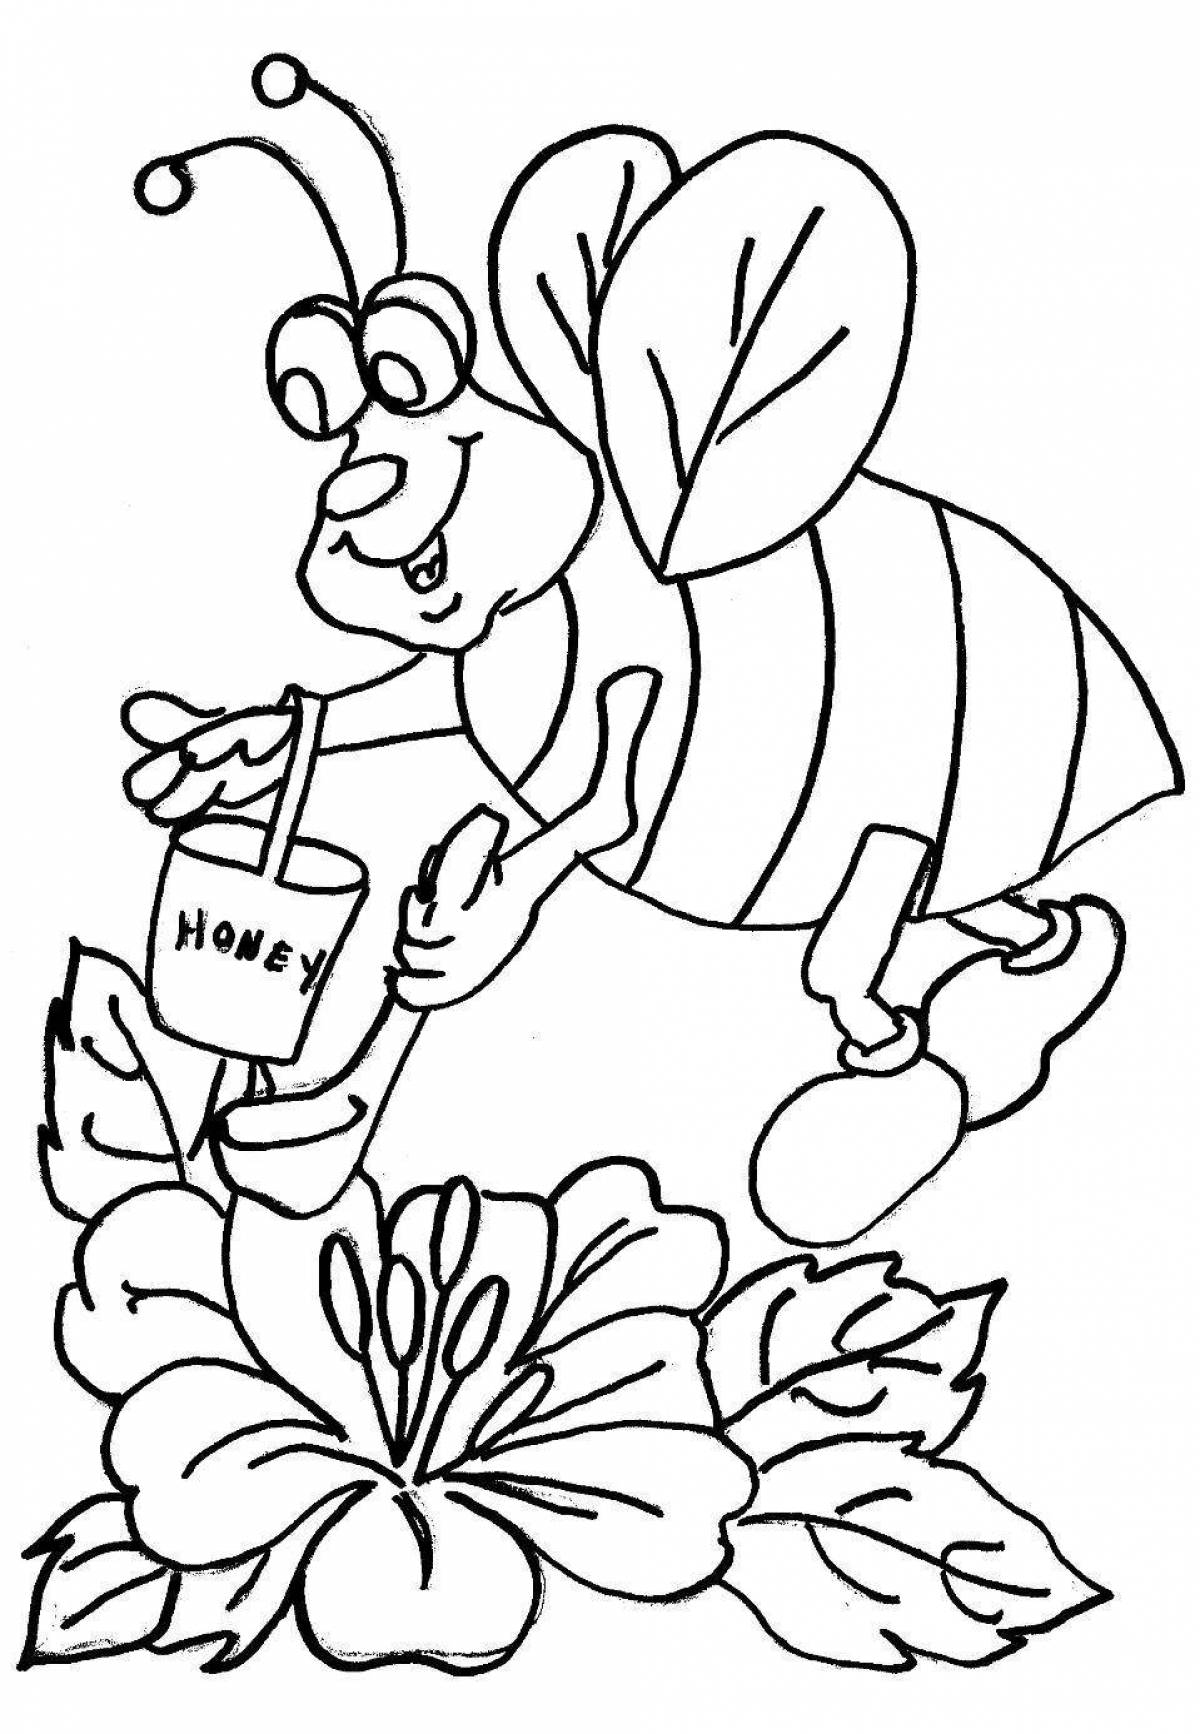 Beekeeper creative coloring book